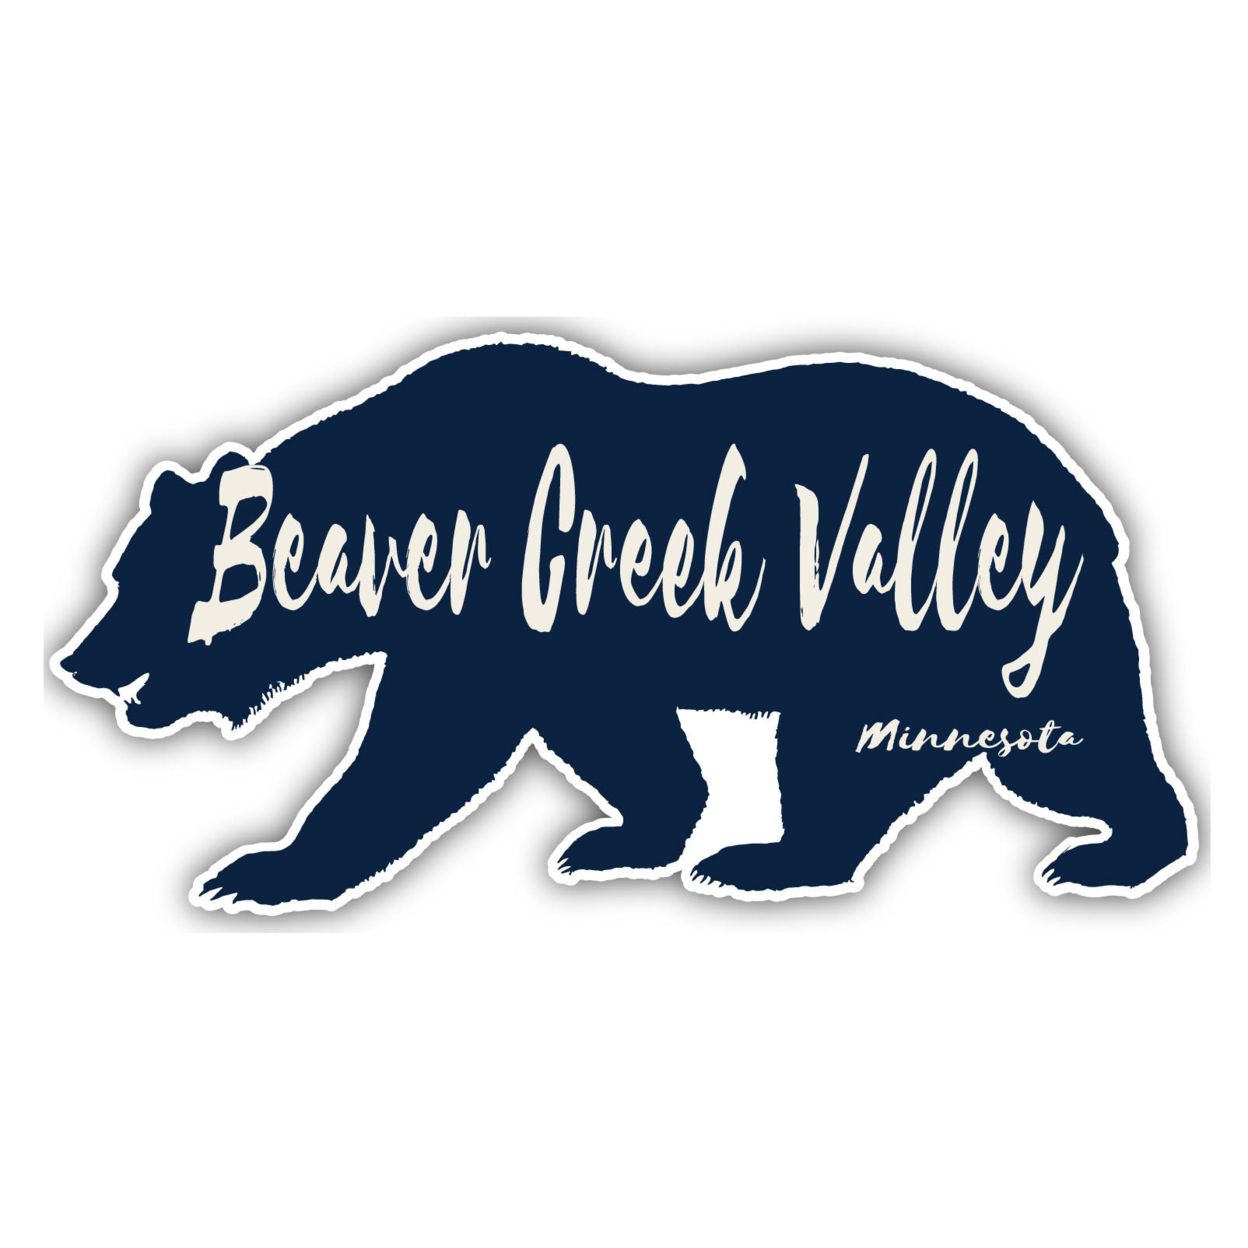 Beaver Creek Valley Minnesota Souvenir Decorative Stickers (Choose Theme And Size) - Single Unit, 6-Inch, Bear